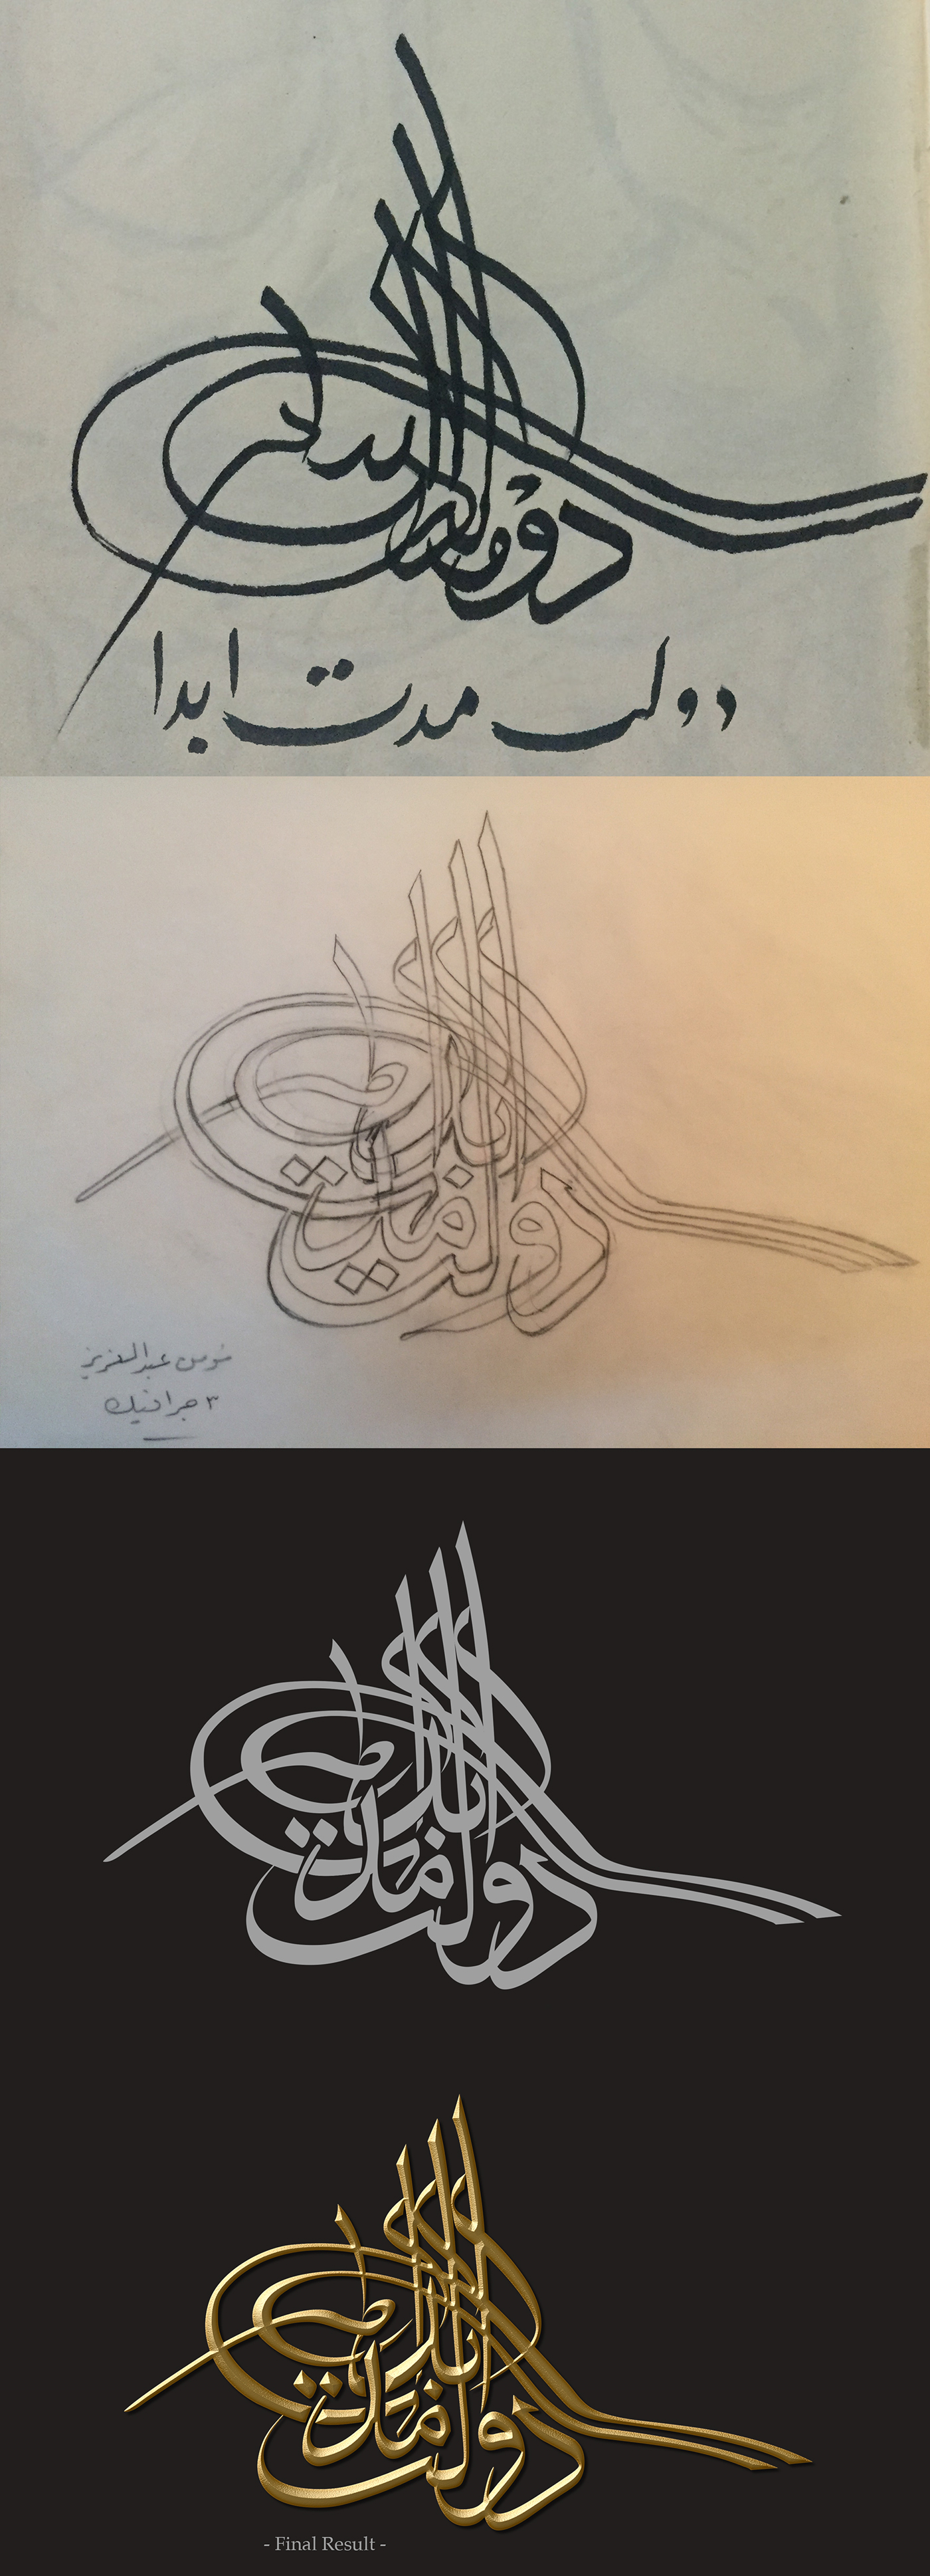 ottoman egypt artist art design academy Ps25Under modern illness Schizophrenia doodle dream life old islamic